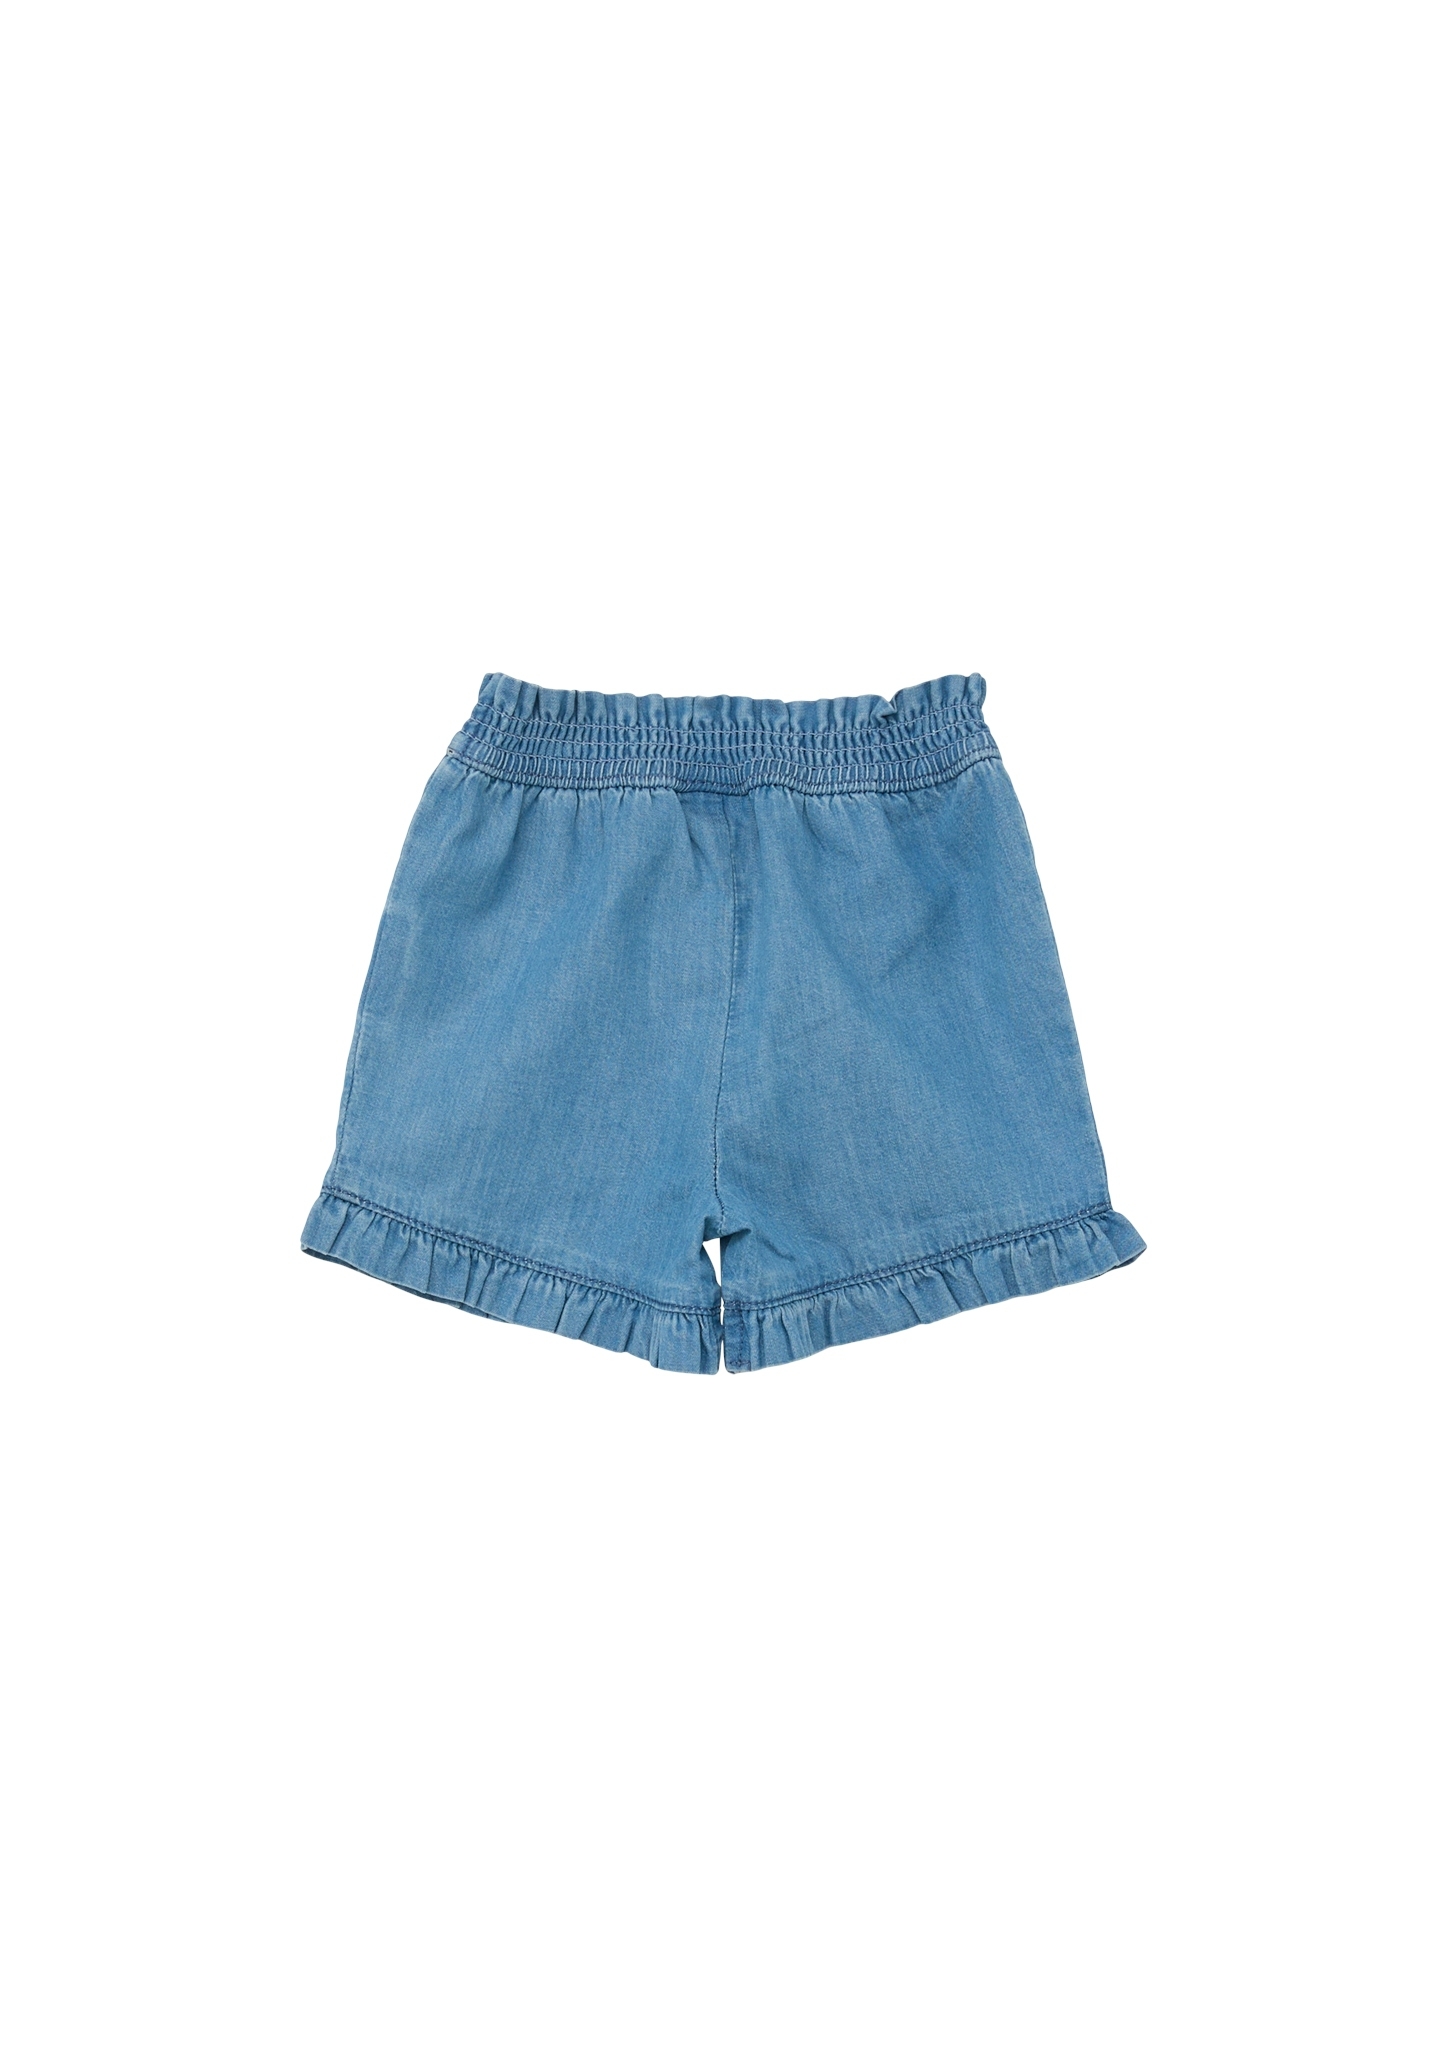 S.OLIVER Jeans-Shorts 10746403